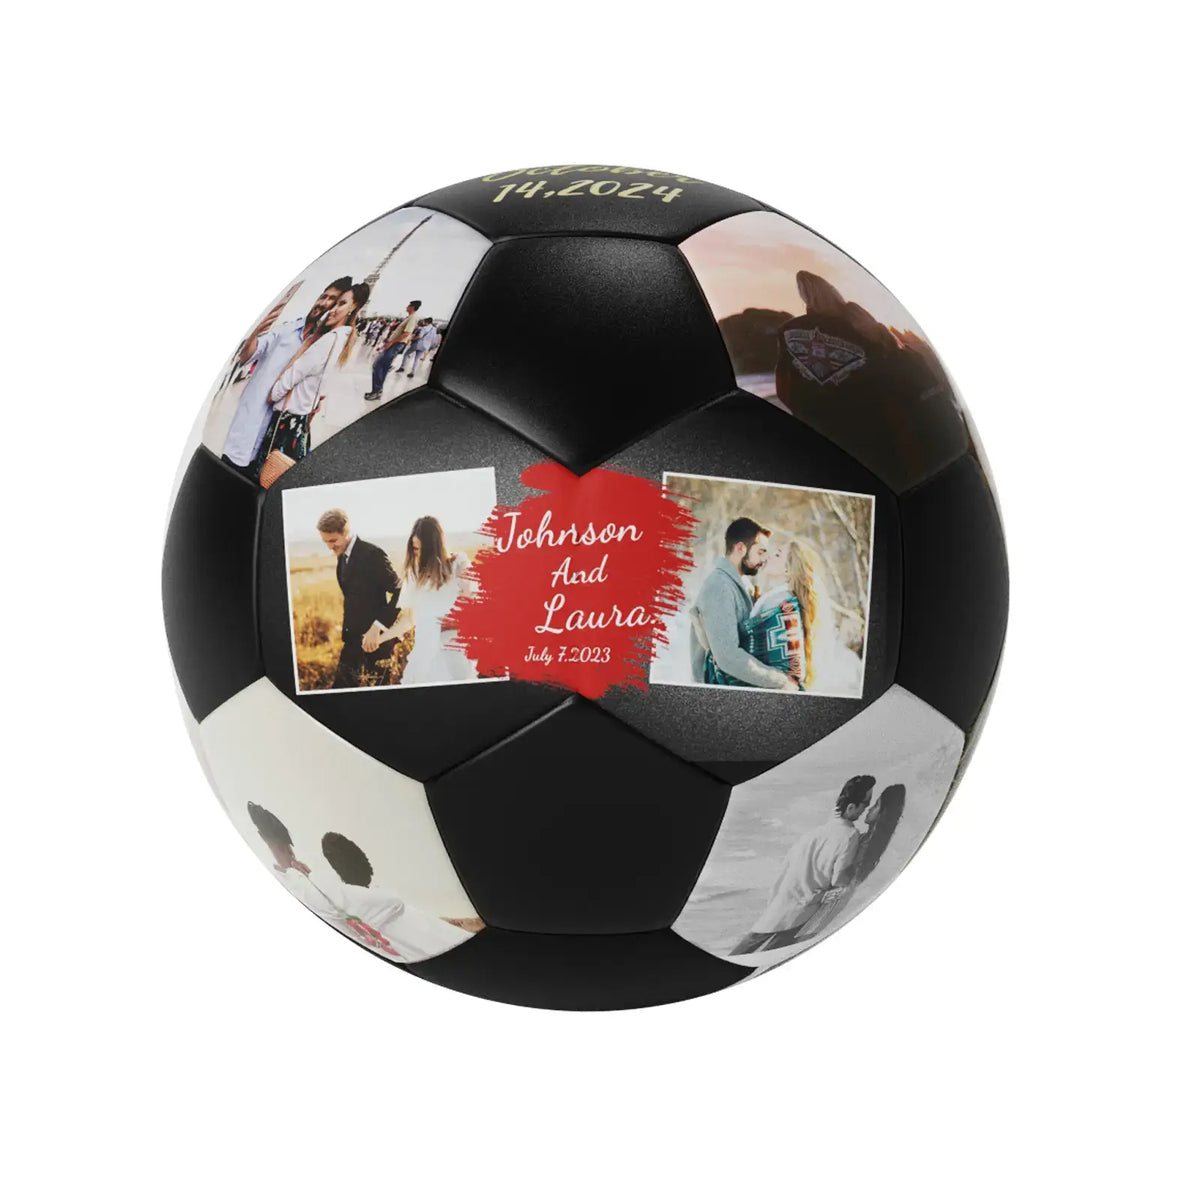 Custom Holographic Reflective Gift Soccer Ball